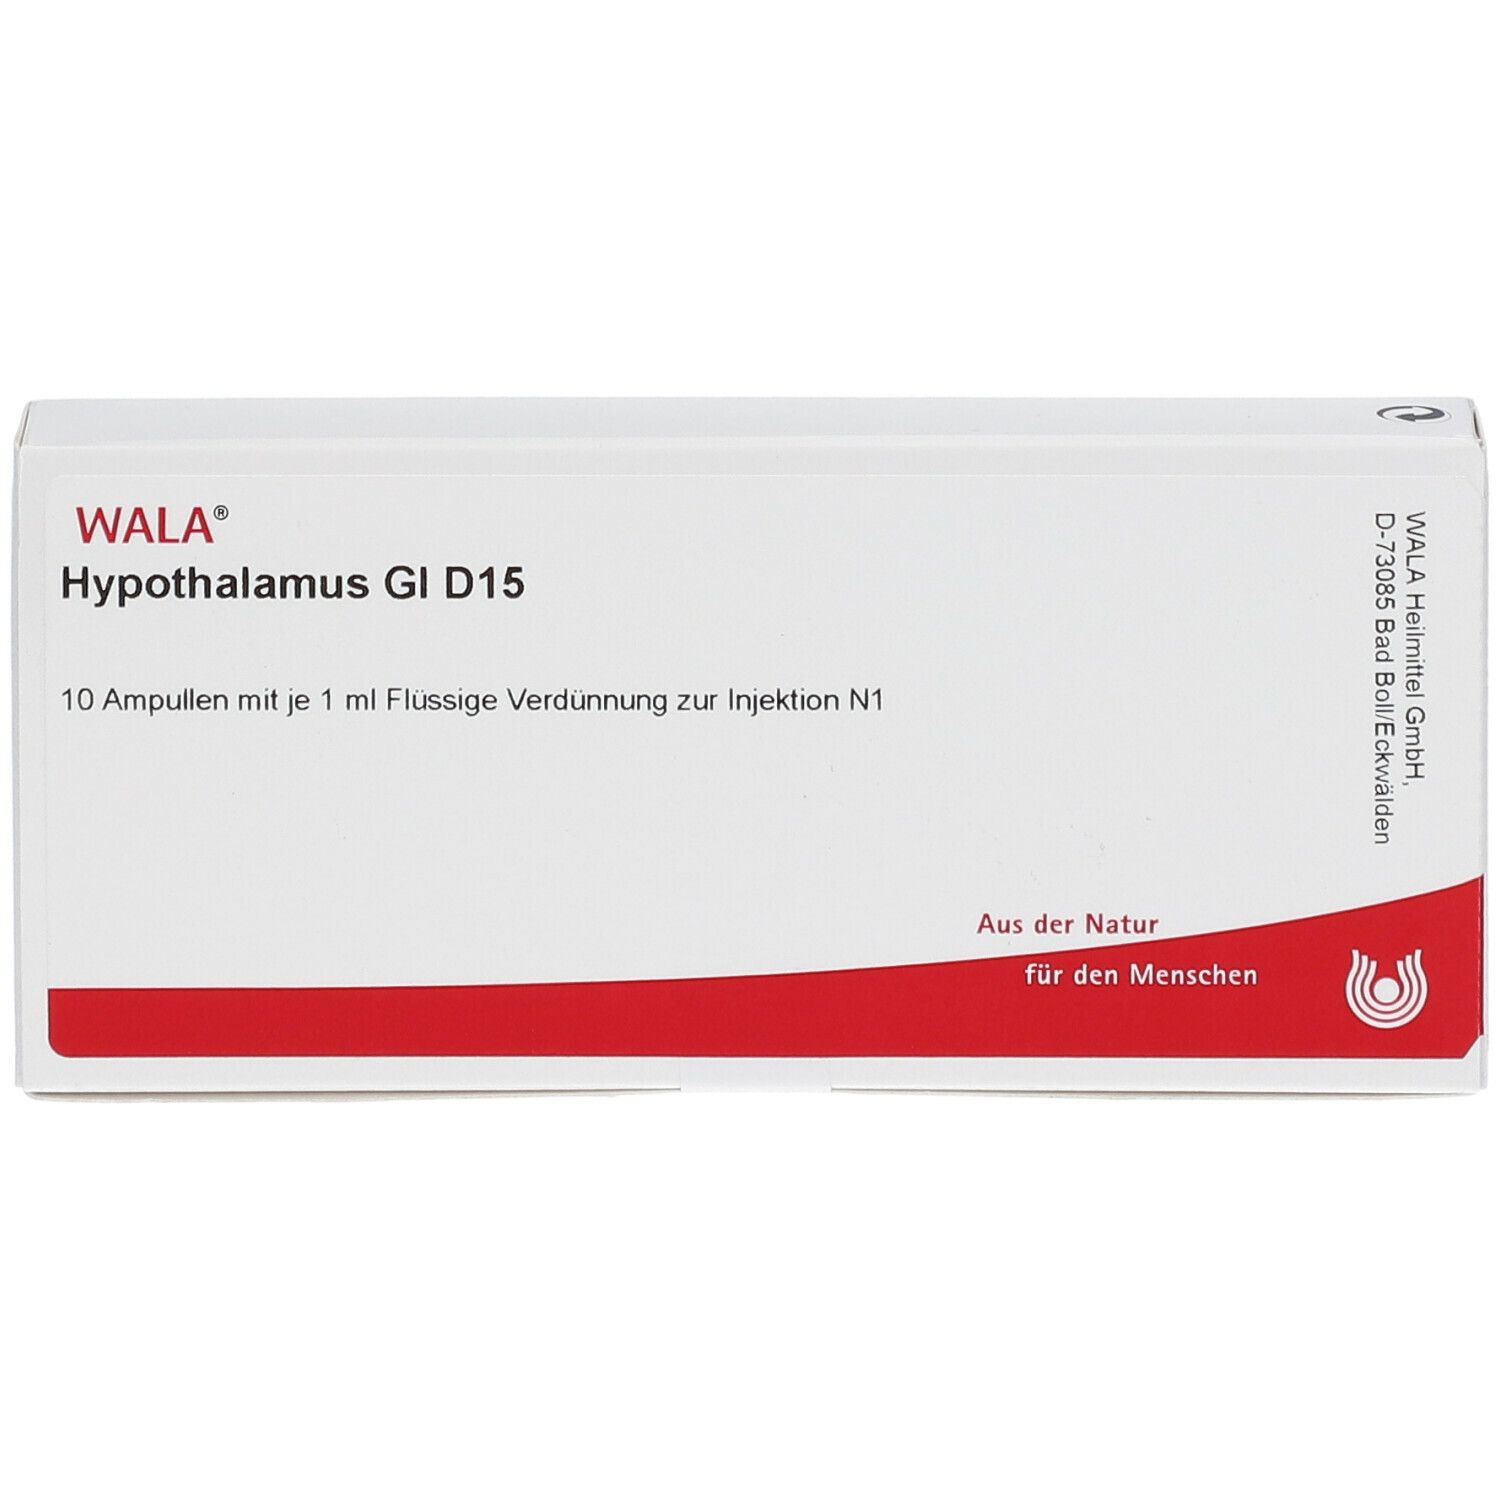 WALA® Hypothalamus Gl D 15